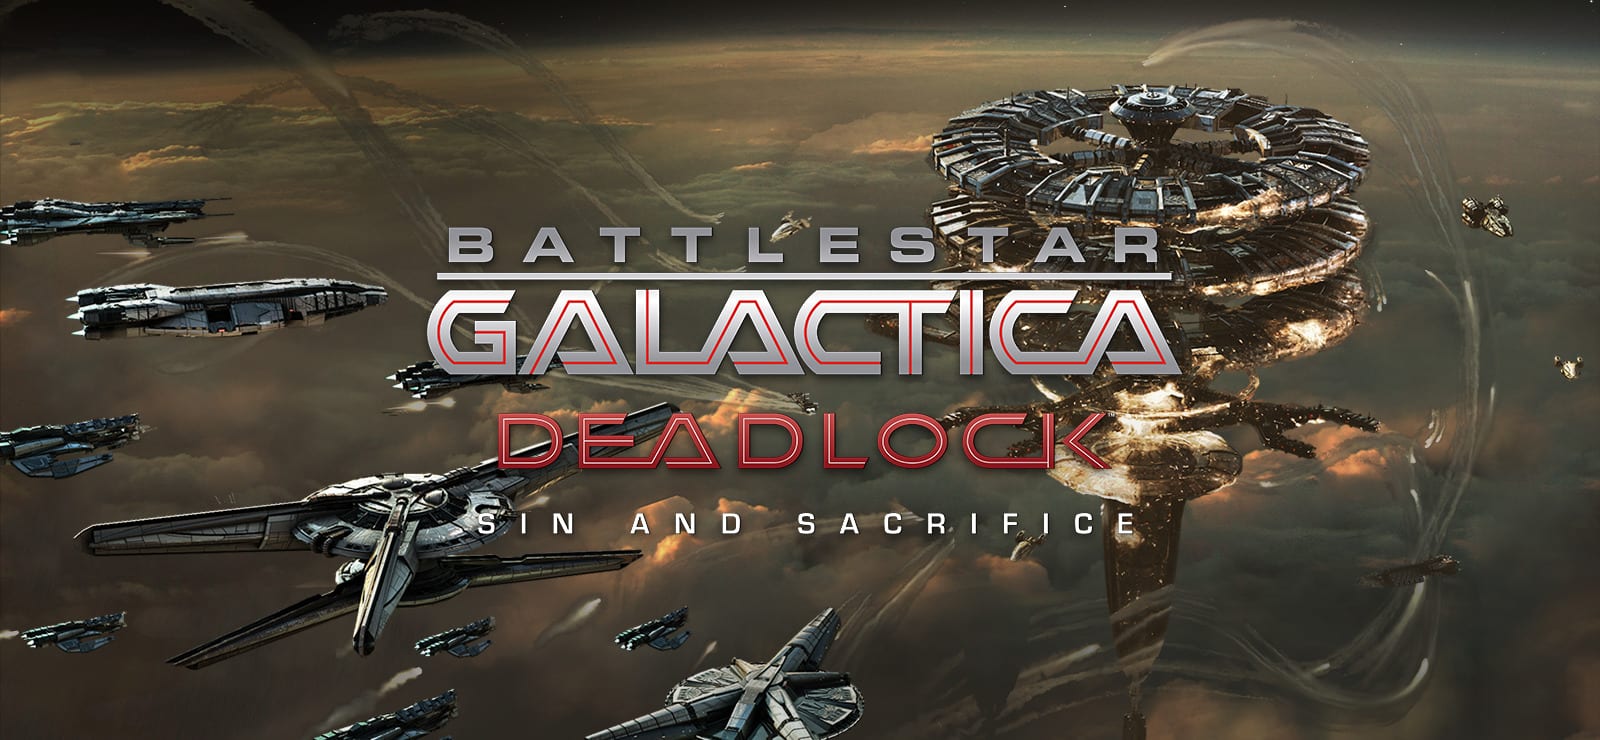 La expansión Sin and Sacrifice llega para Battlestar Galactica Deadlock la próxima semana